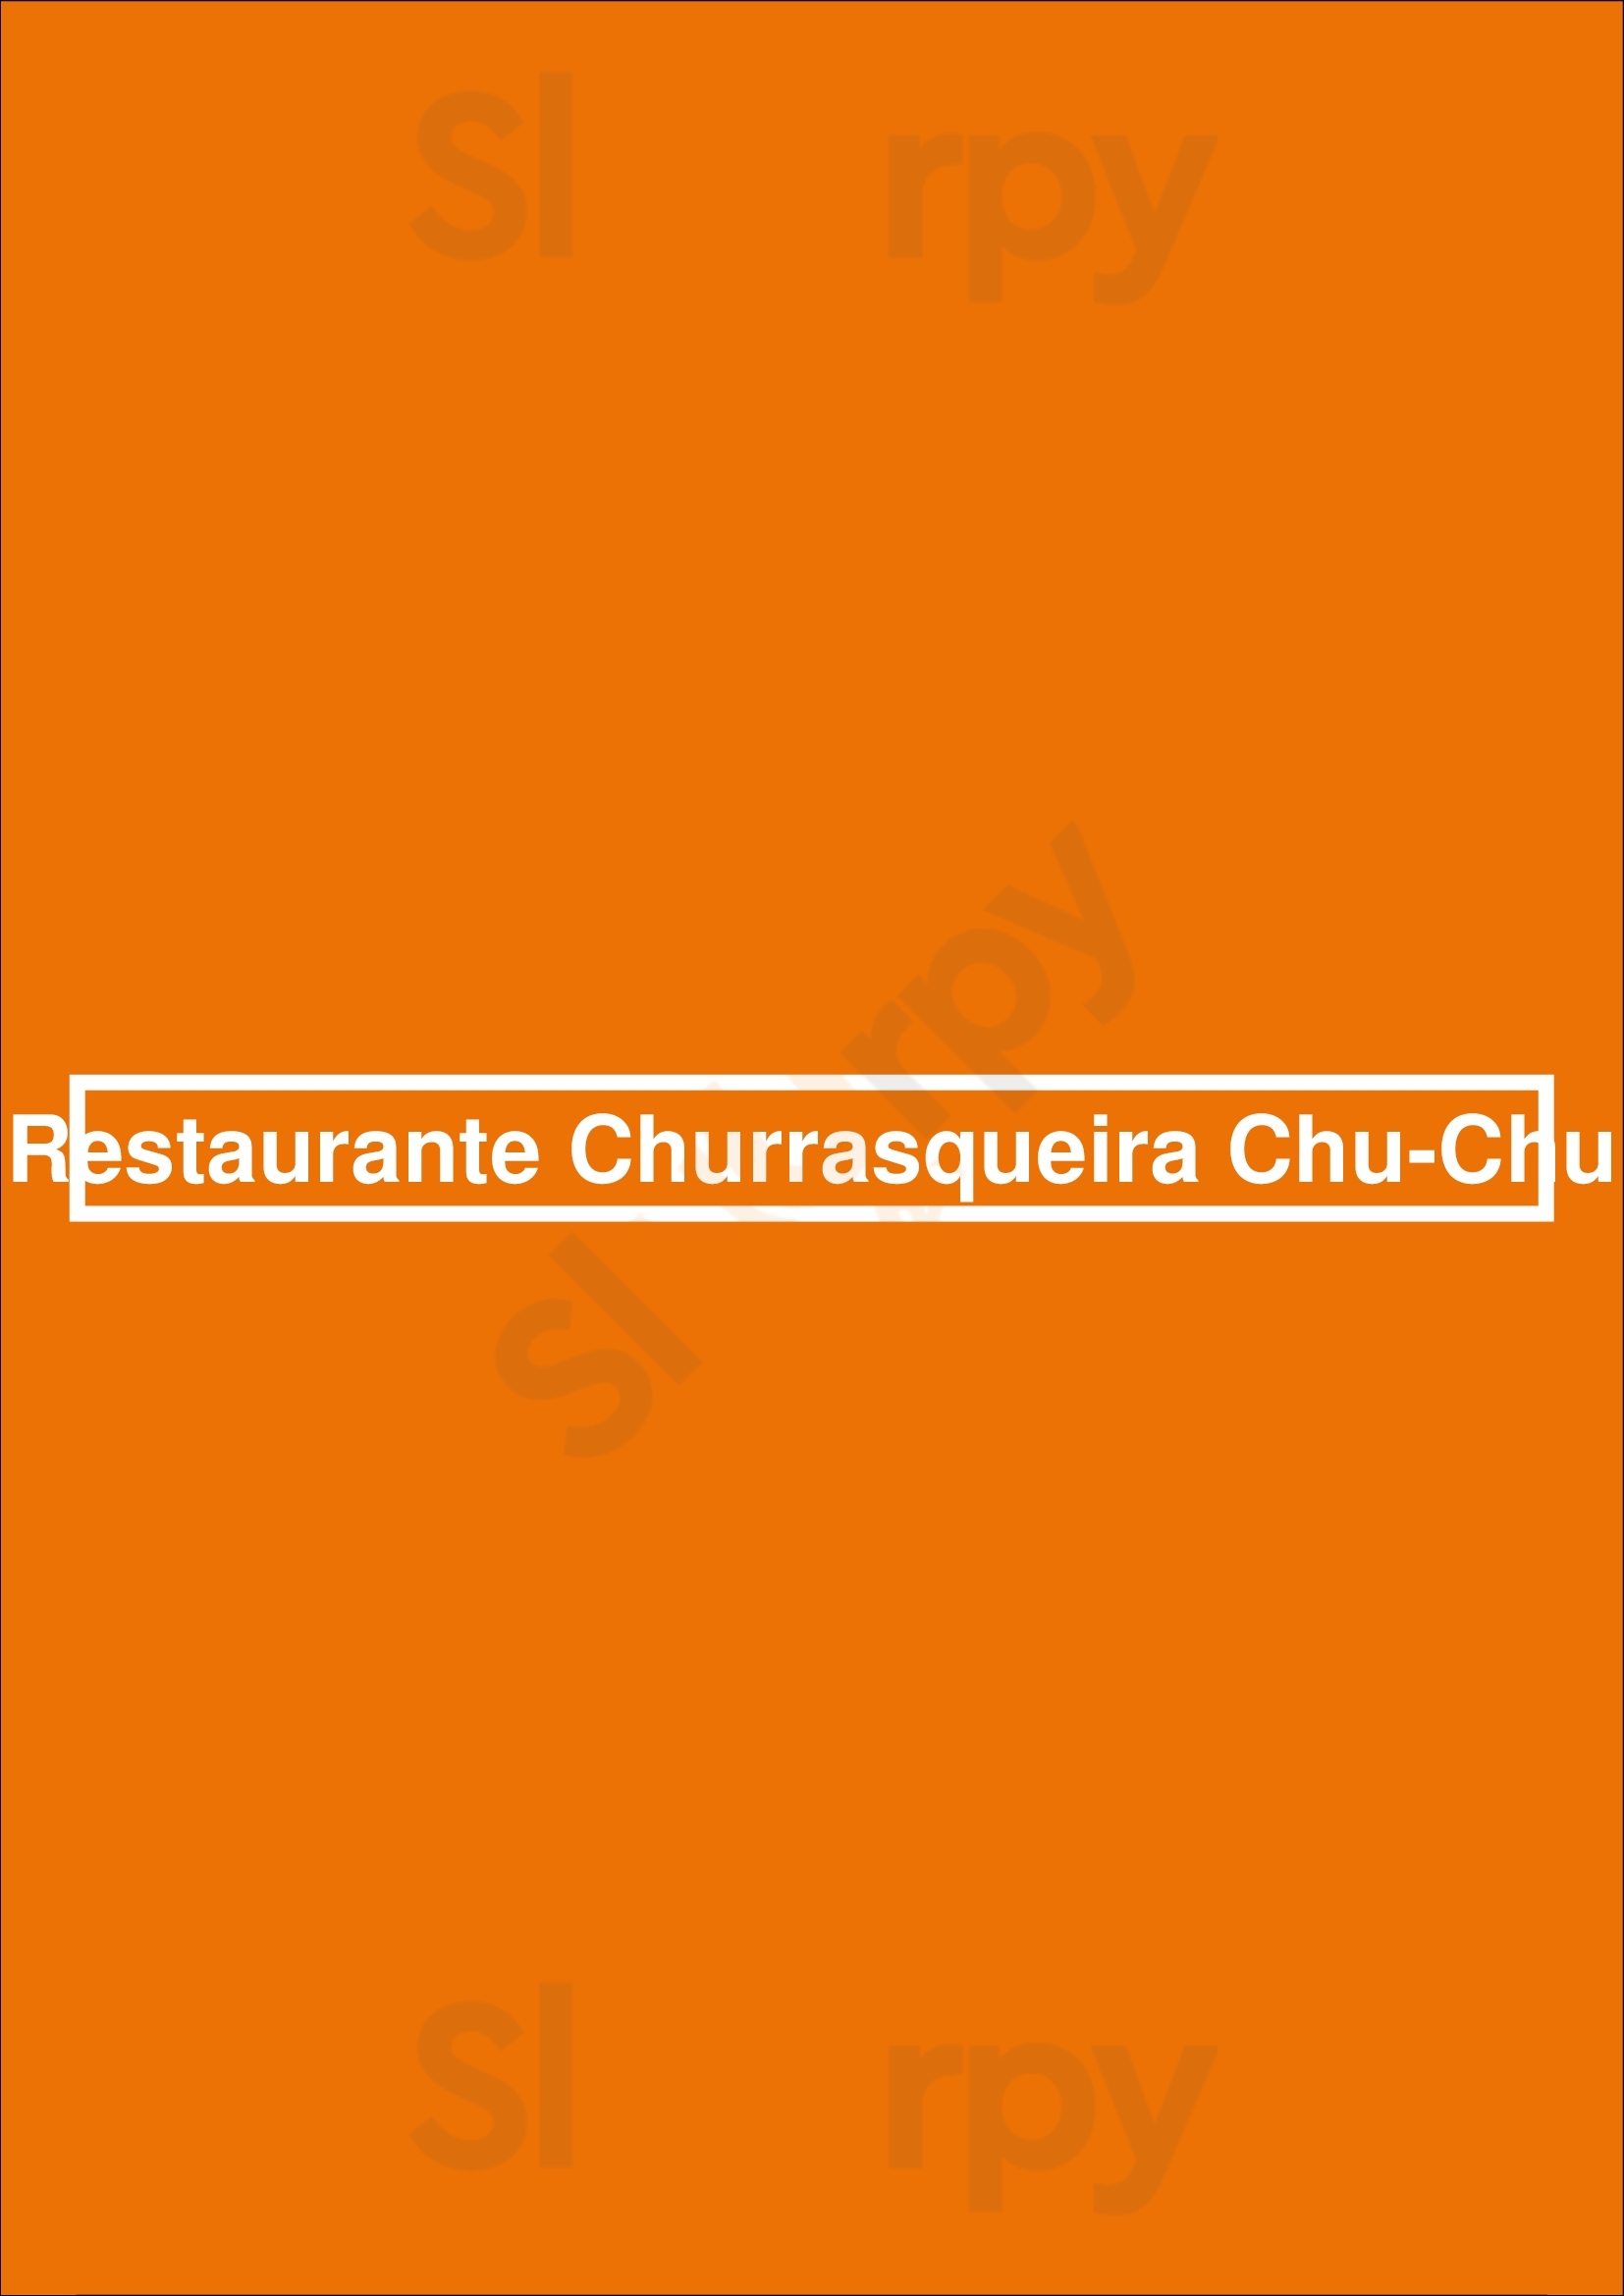 Restaurante Churrasqueira Chu-chu Lisboa Menu - 1